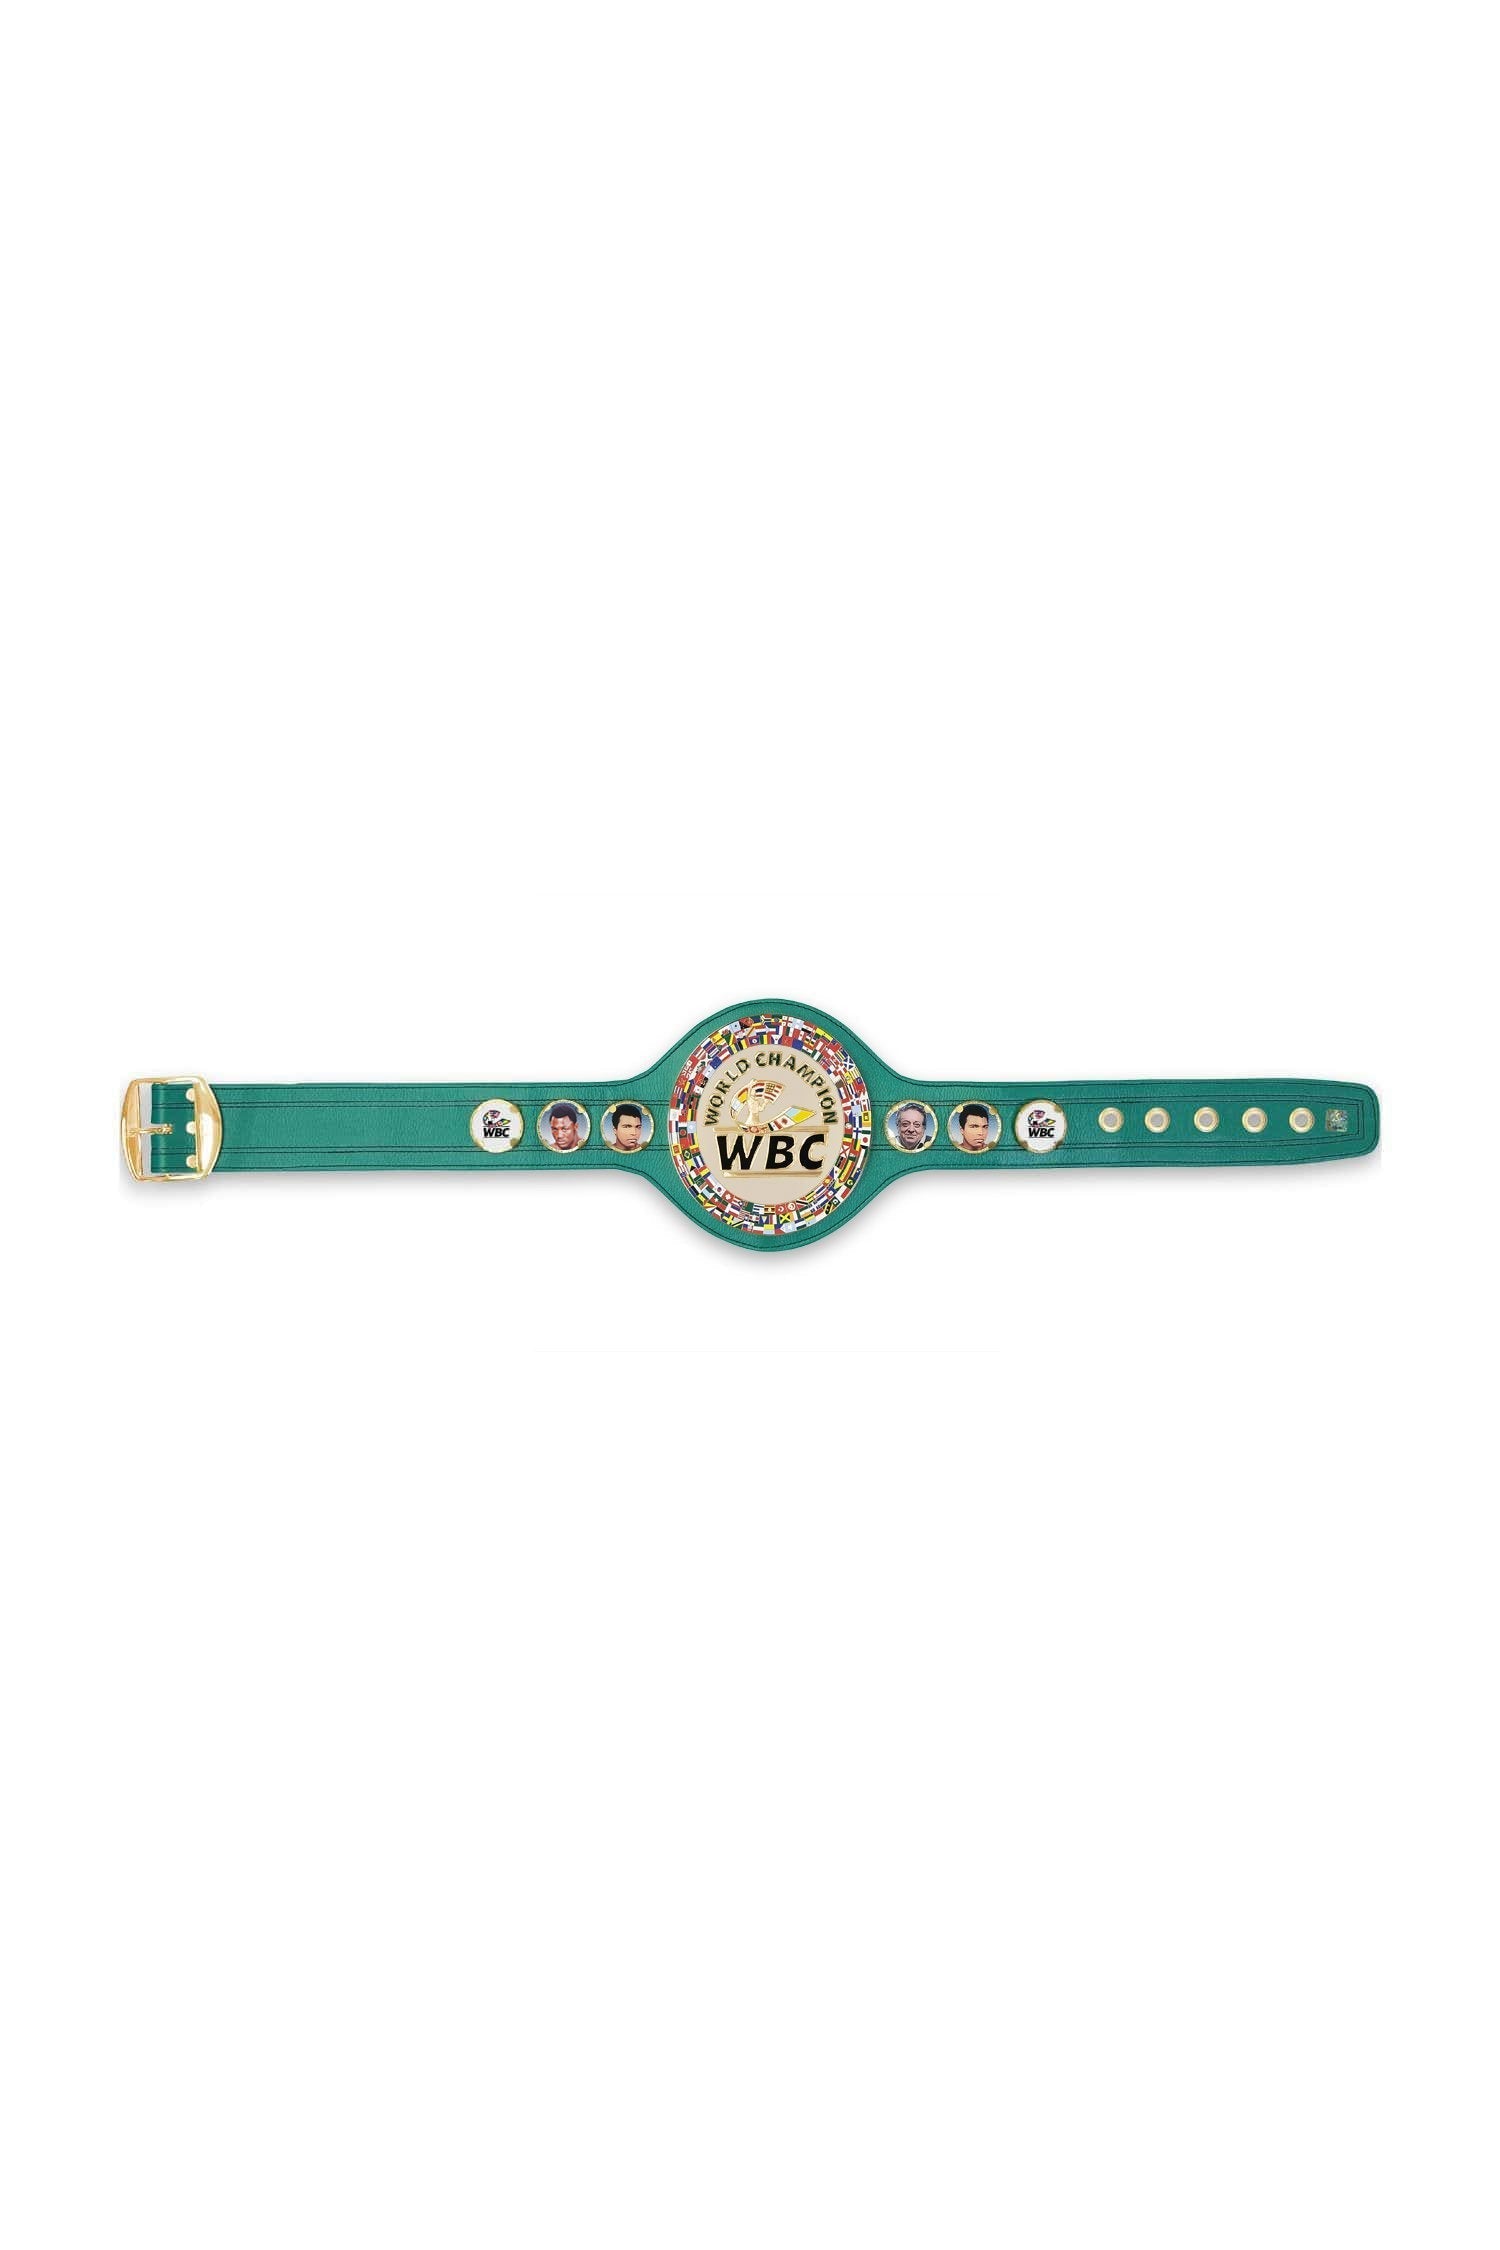 WBC - チャンピオン ベルト「ヒストリック ファイト」モハメド アリ vs 